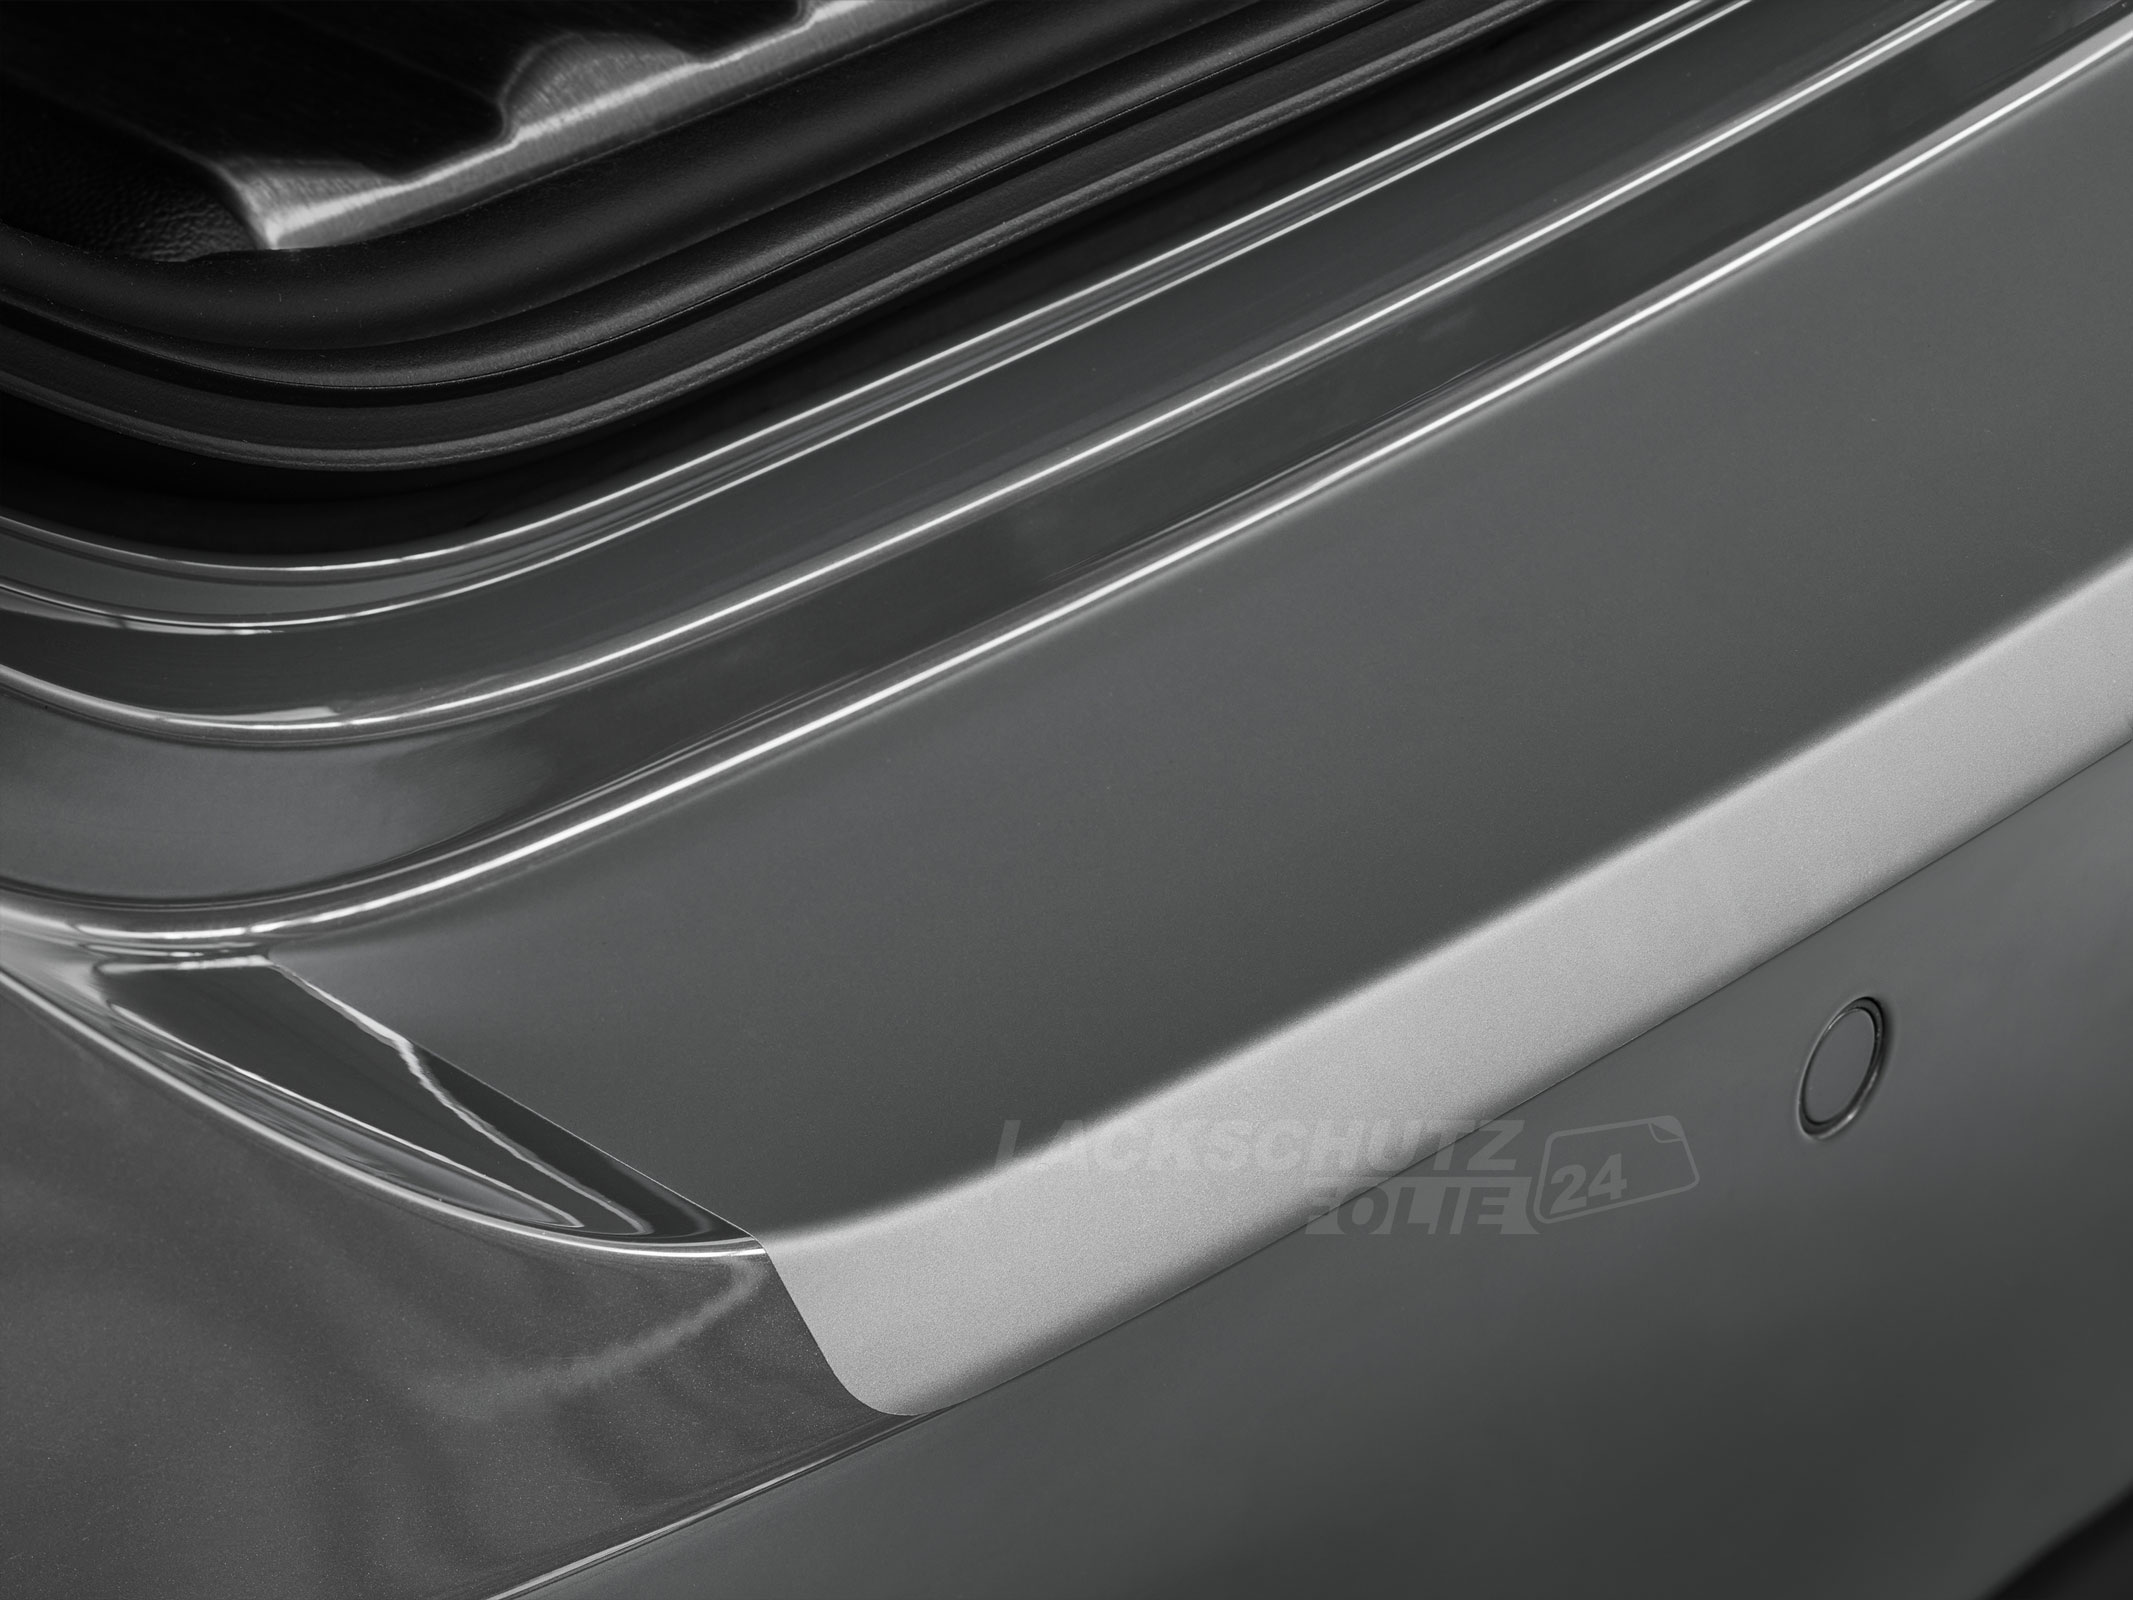 Ladekantenschutzfolie - Transparent Glatt MATT 110 µm stark  für Toyota Yaris  (III) Typ XP13, BJ 11/2011-08/2014